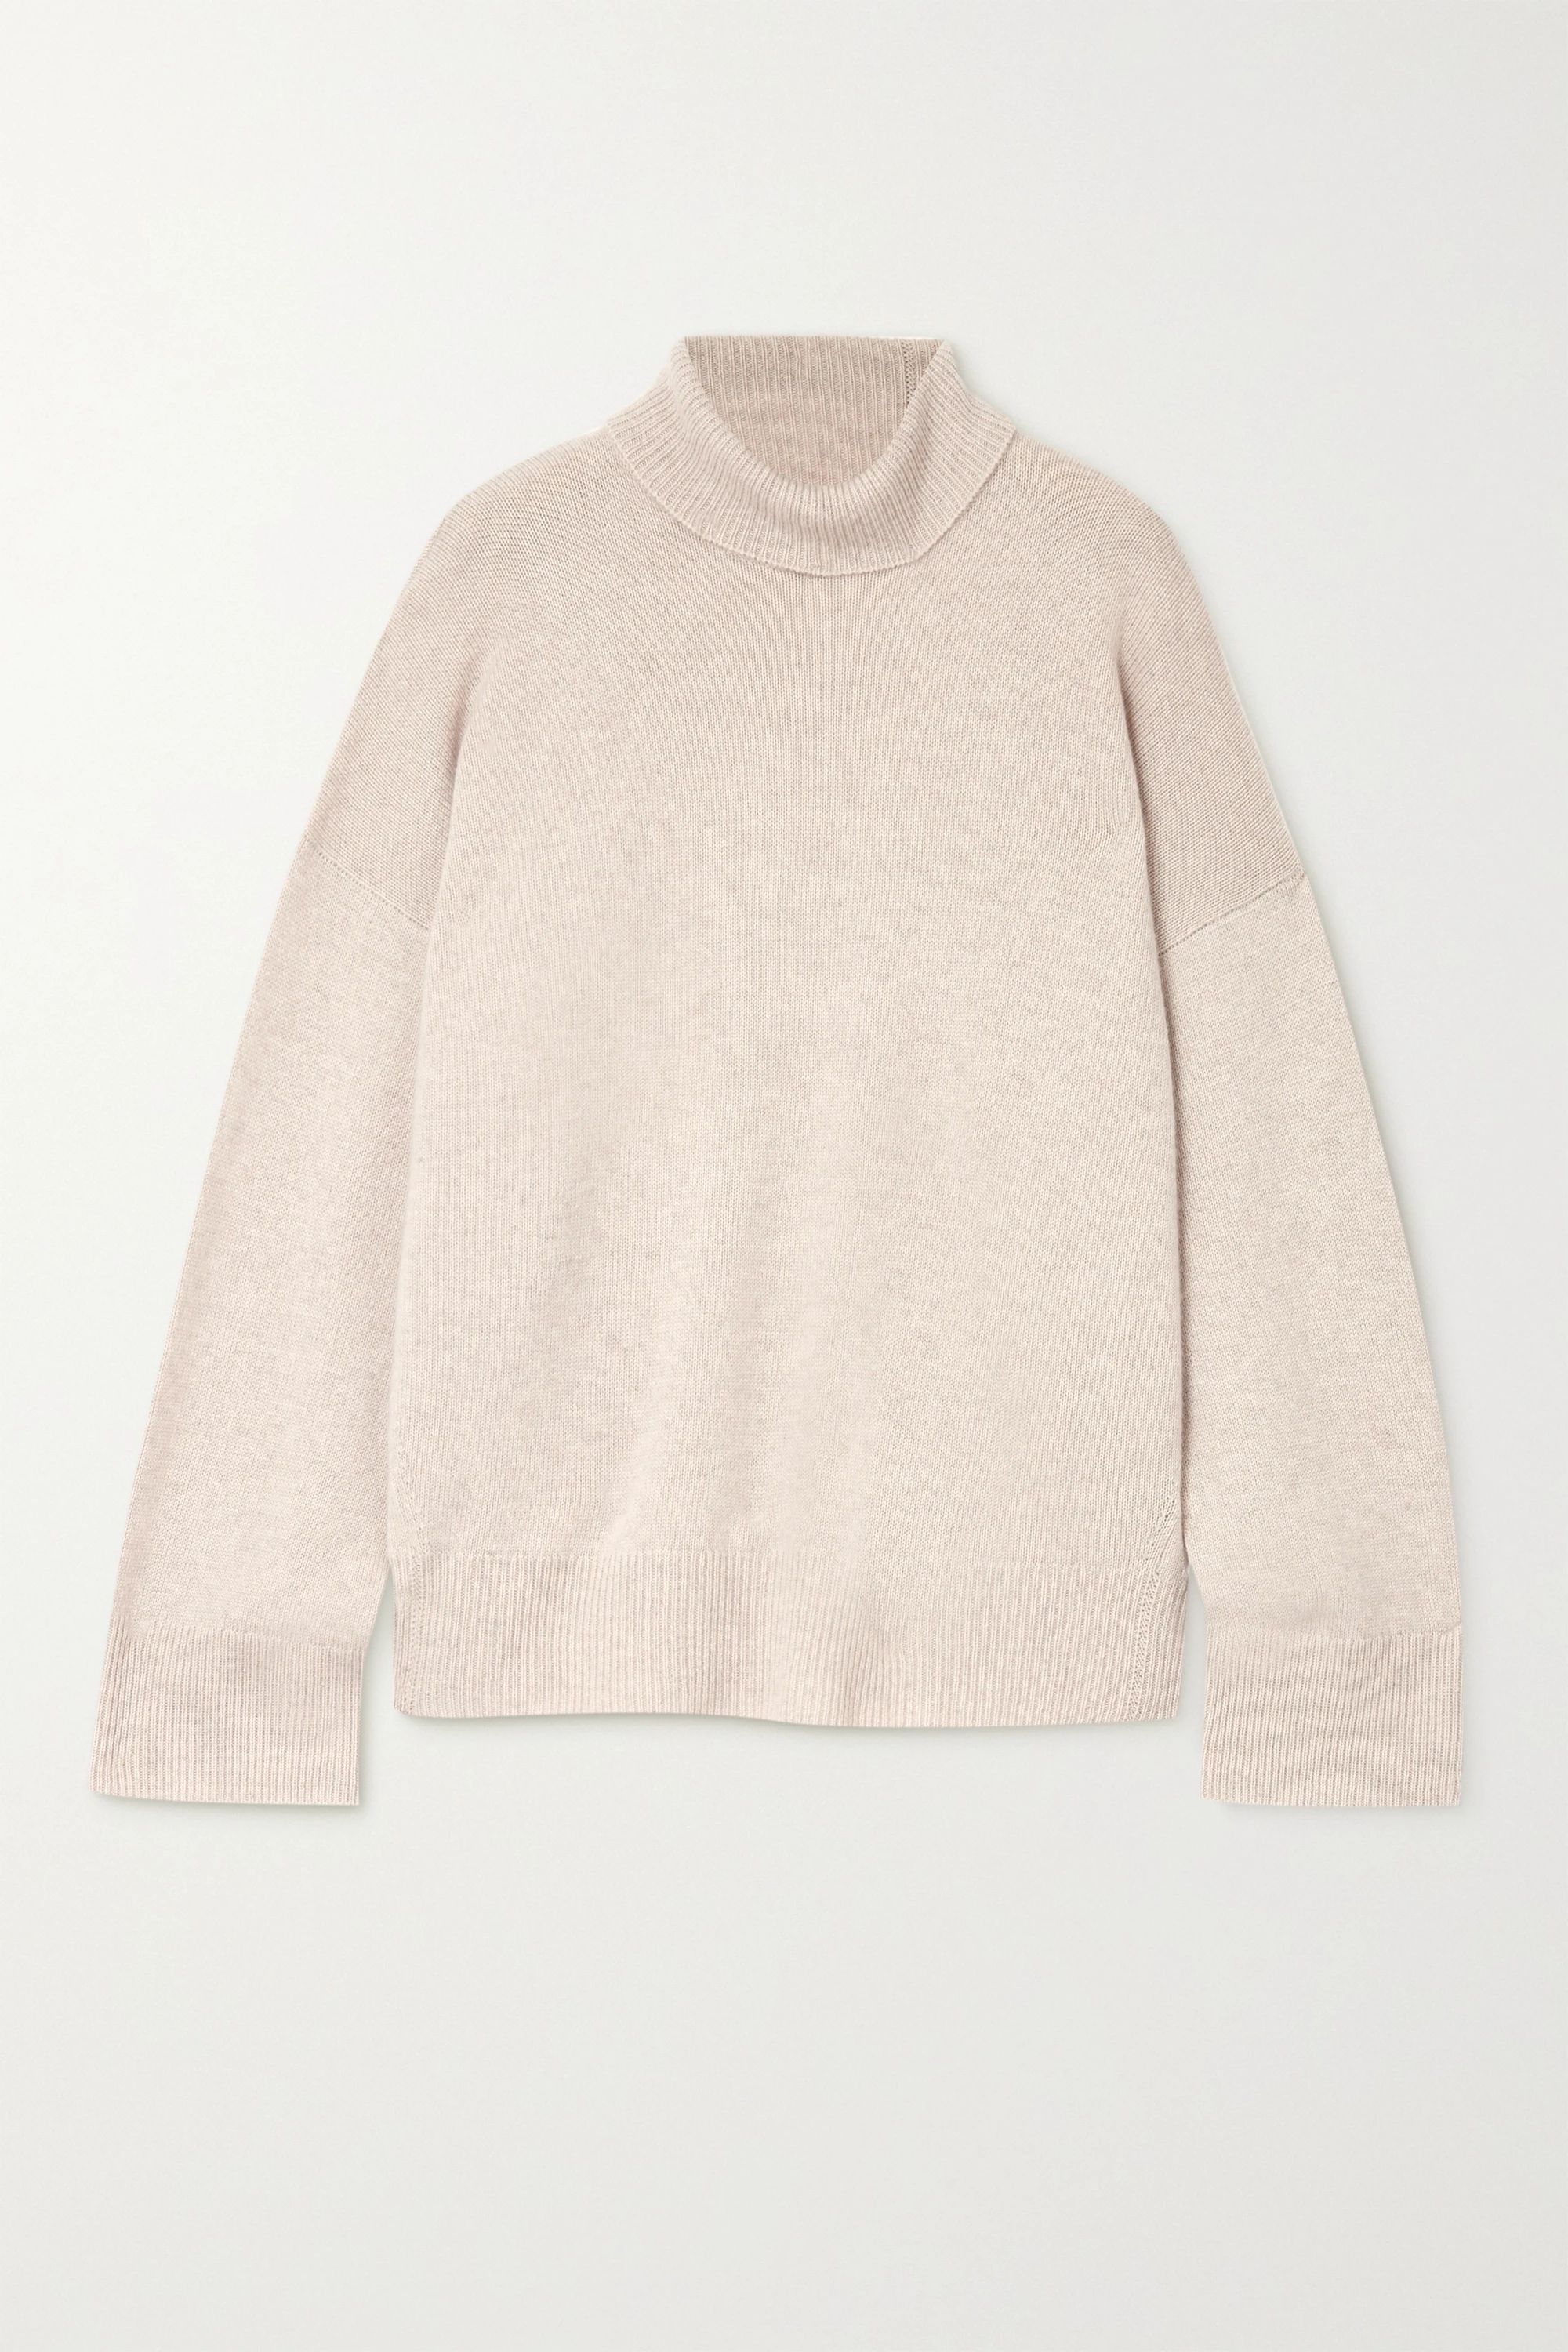 Beige Suede oversized cashmere turtleneck sweater | Le Kasha | NET-A-PORTER | NET-A-PORTER (US)